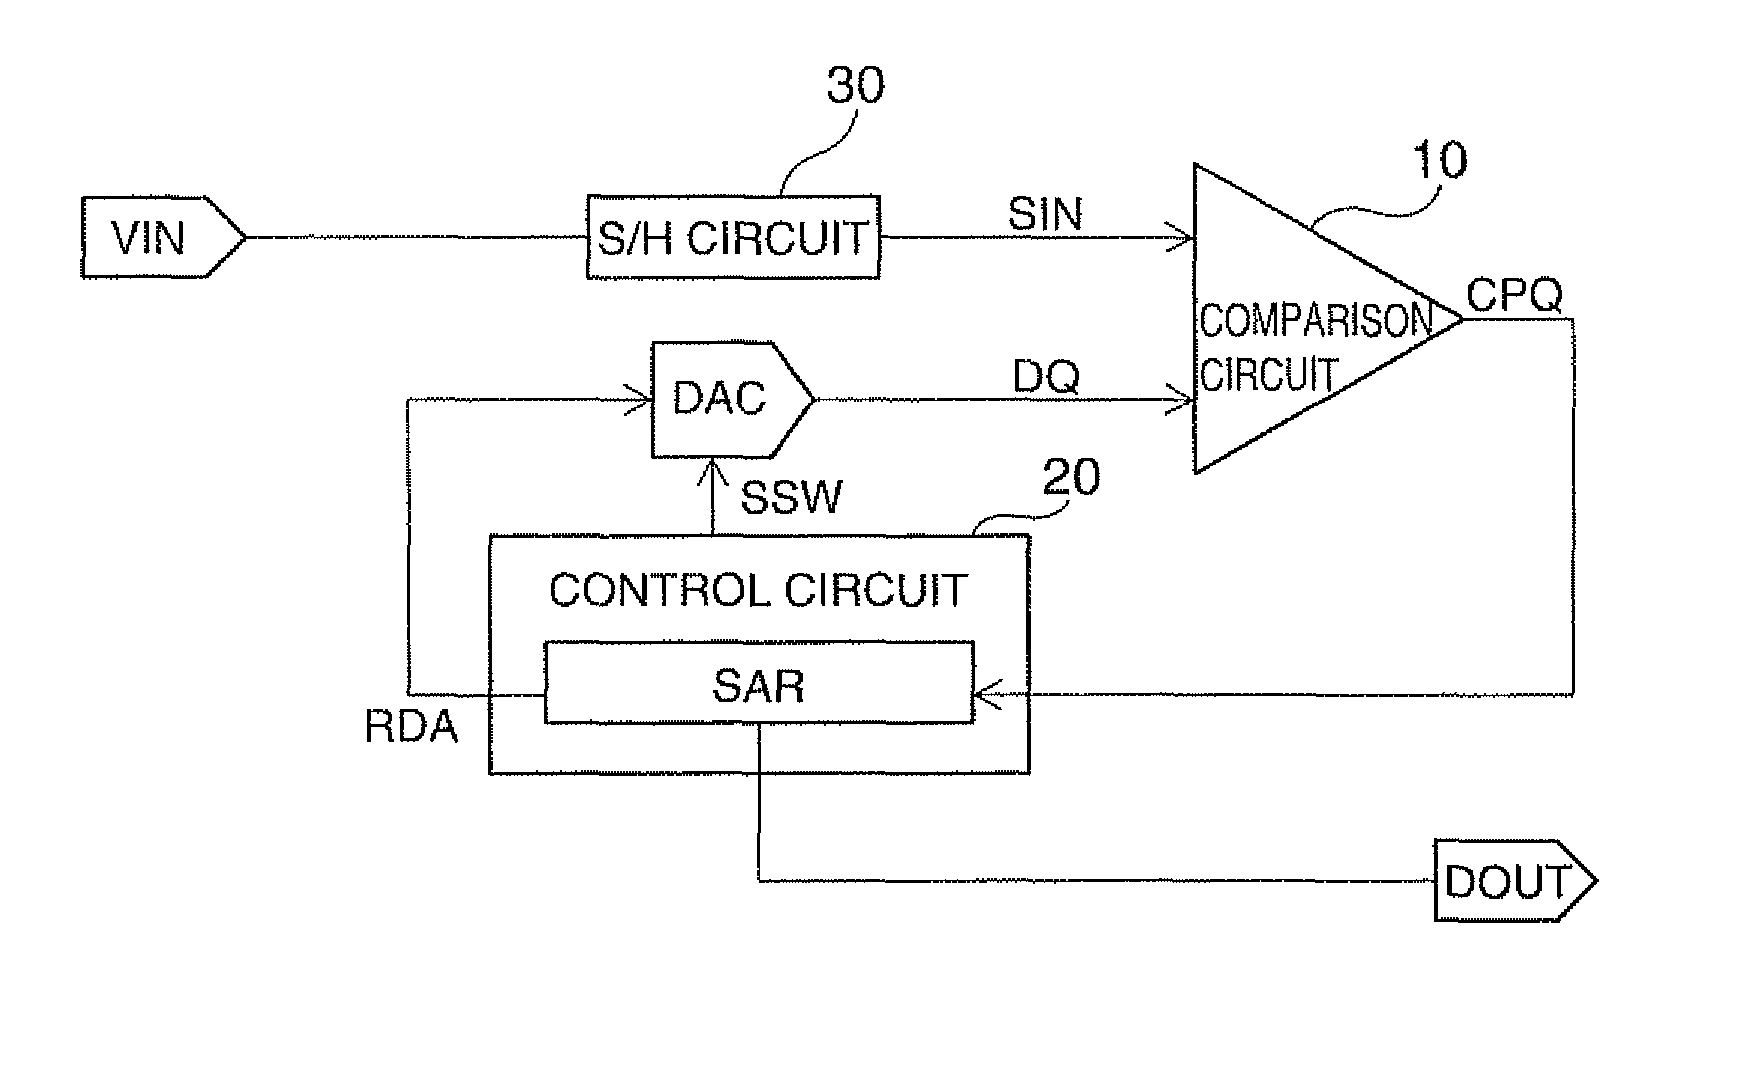 D/A conversion circuit, A/D conversion circuit and electronic apparatus